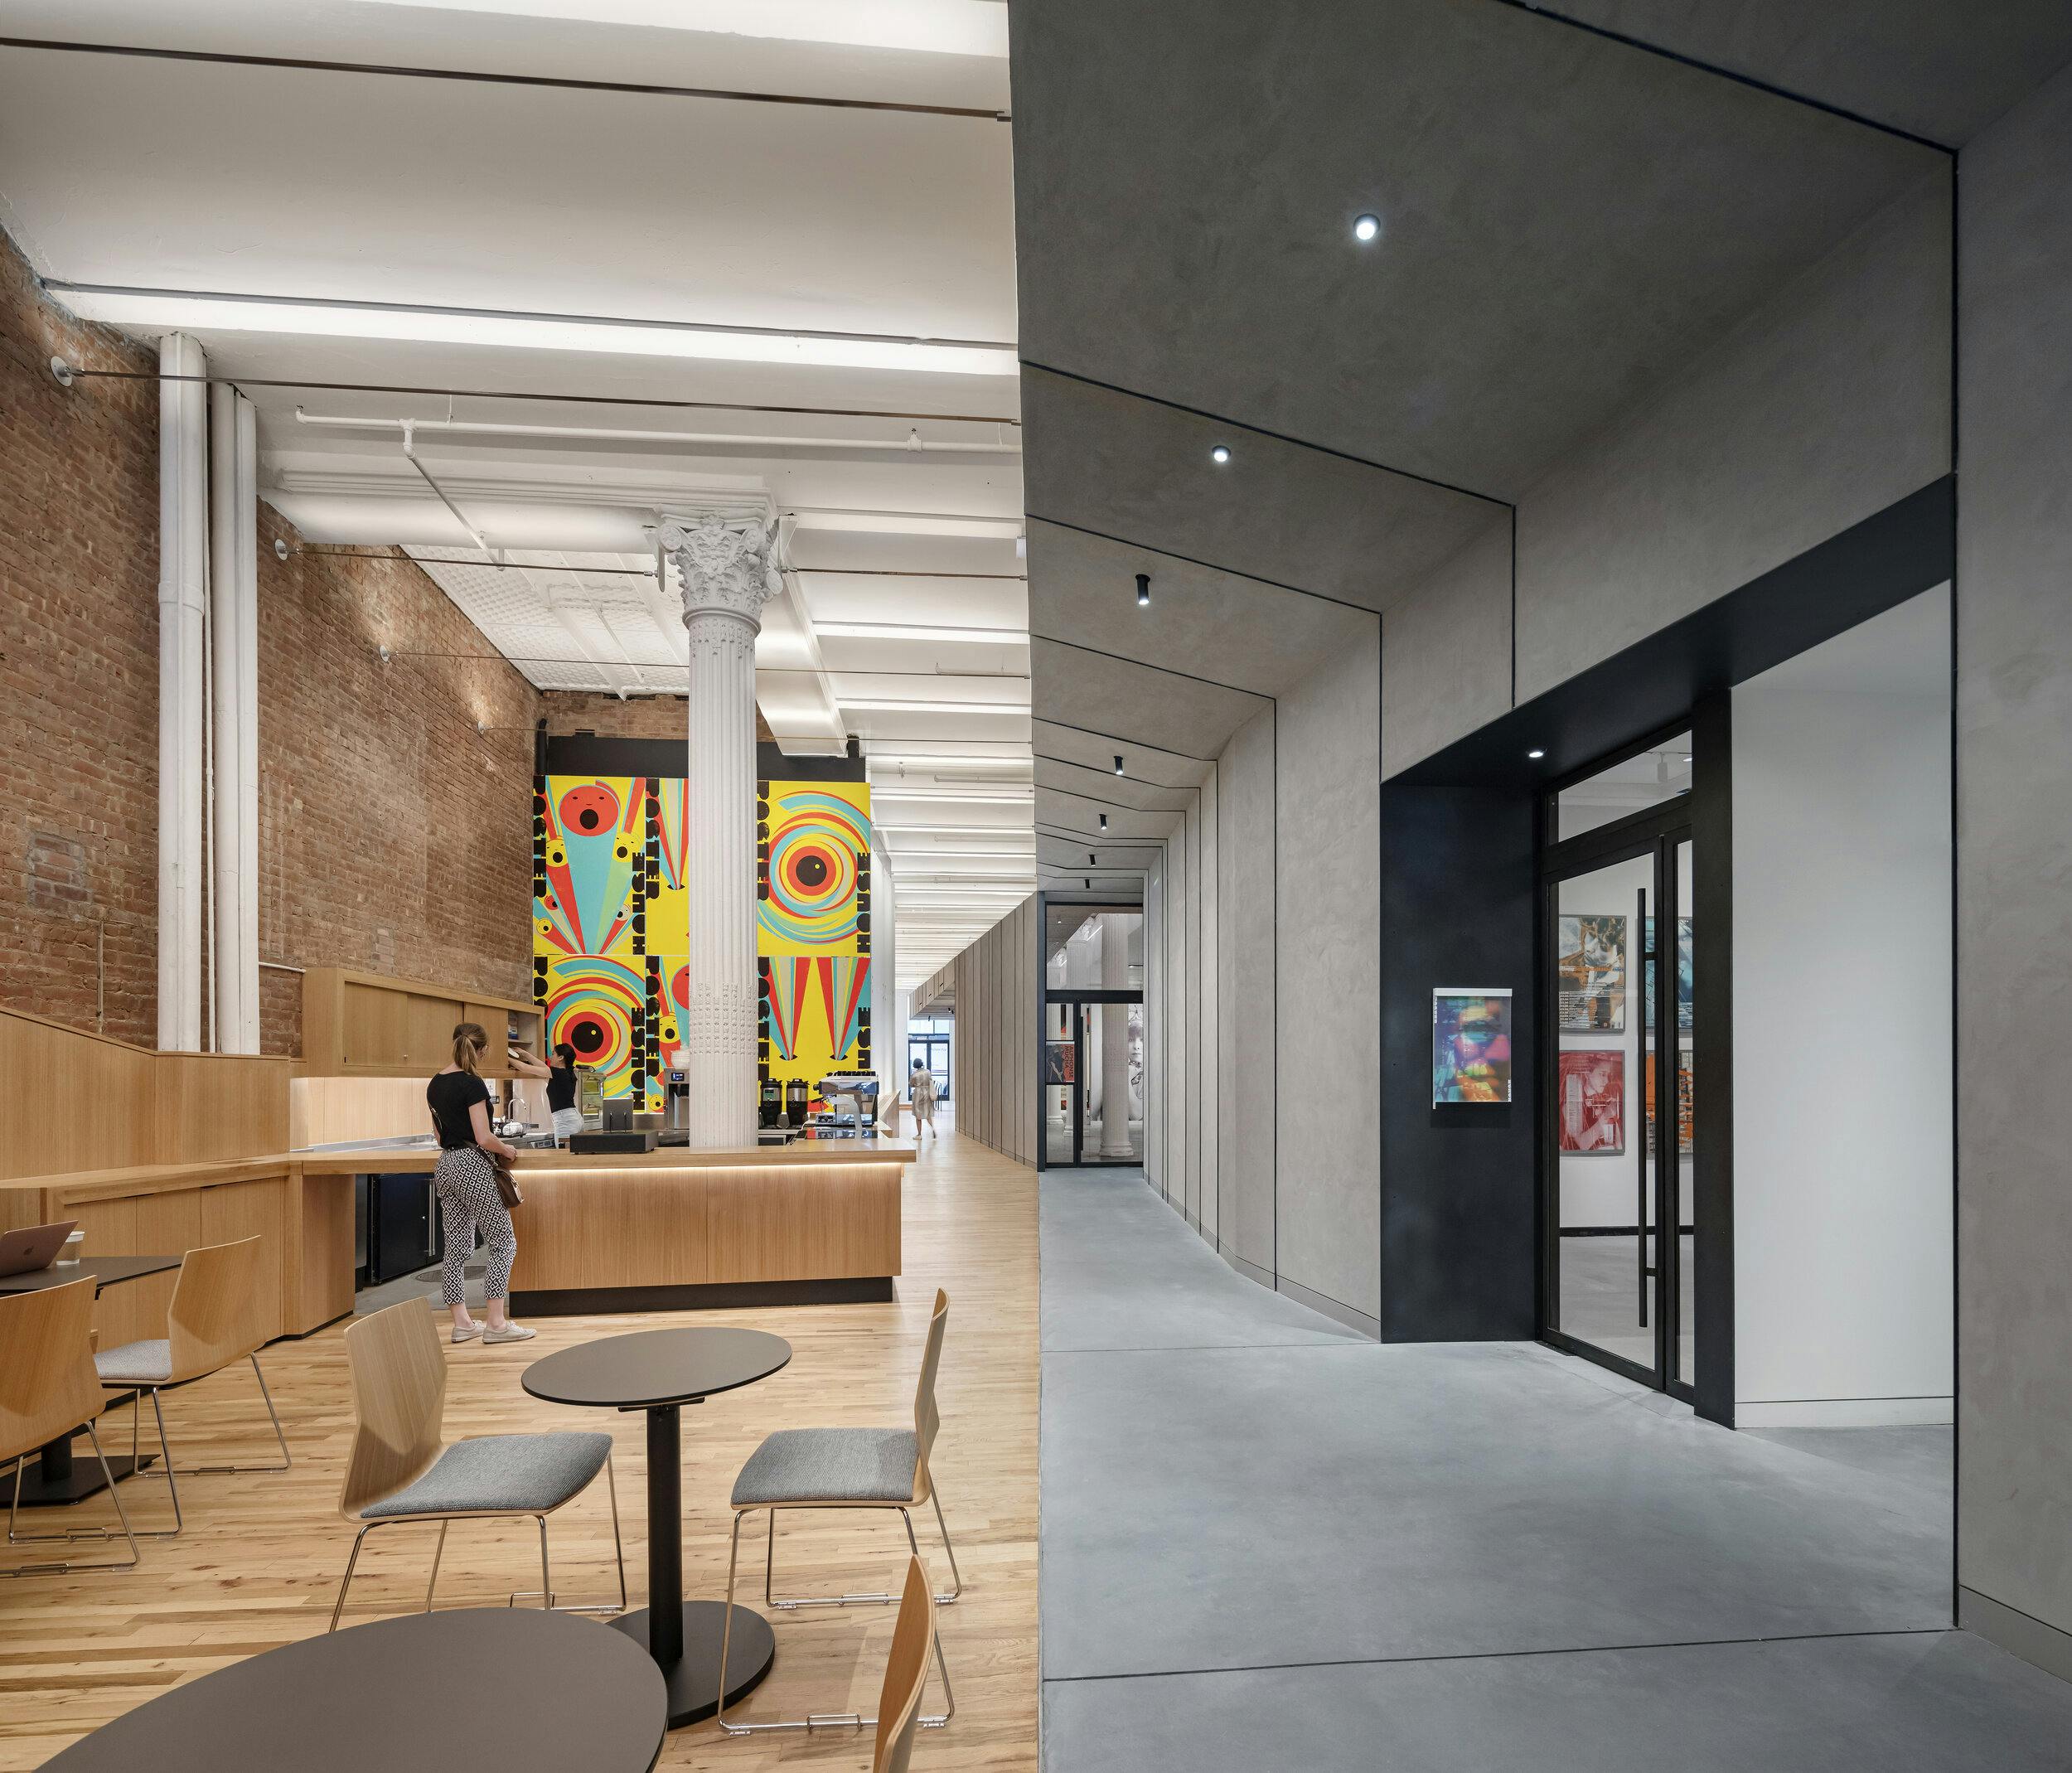 Interior Design S 2019 Hall Of Fame Awards Honor Rick Joy